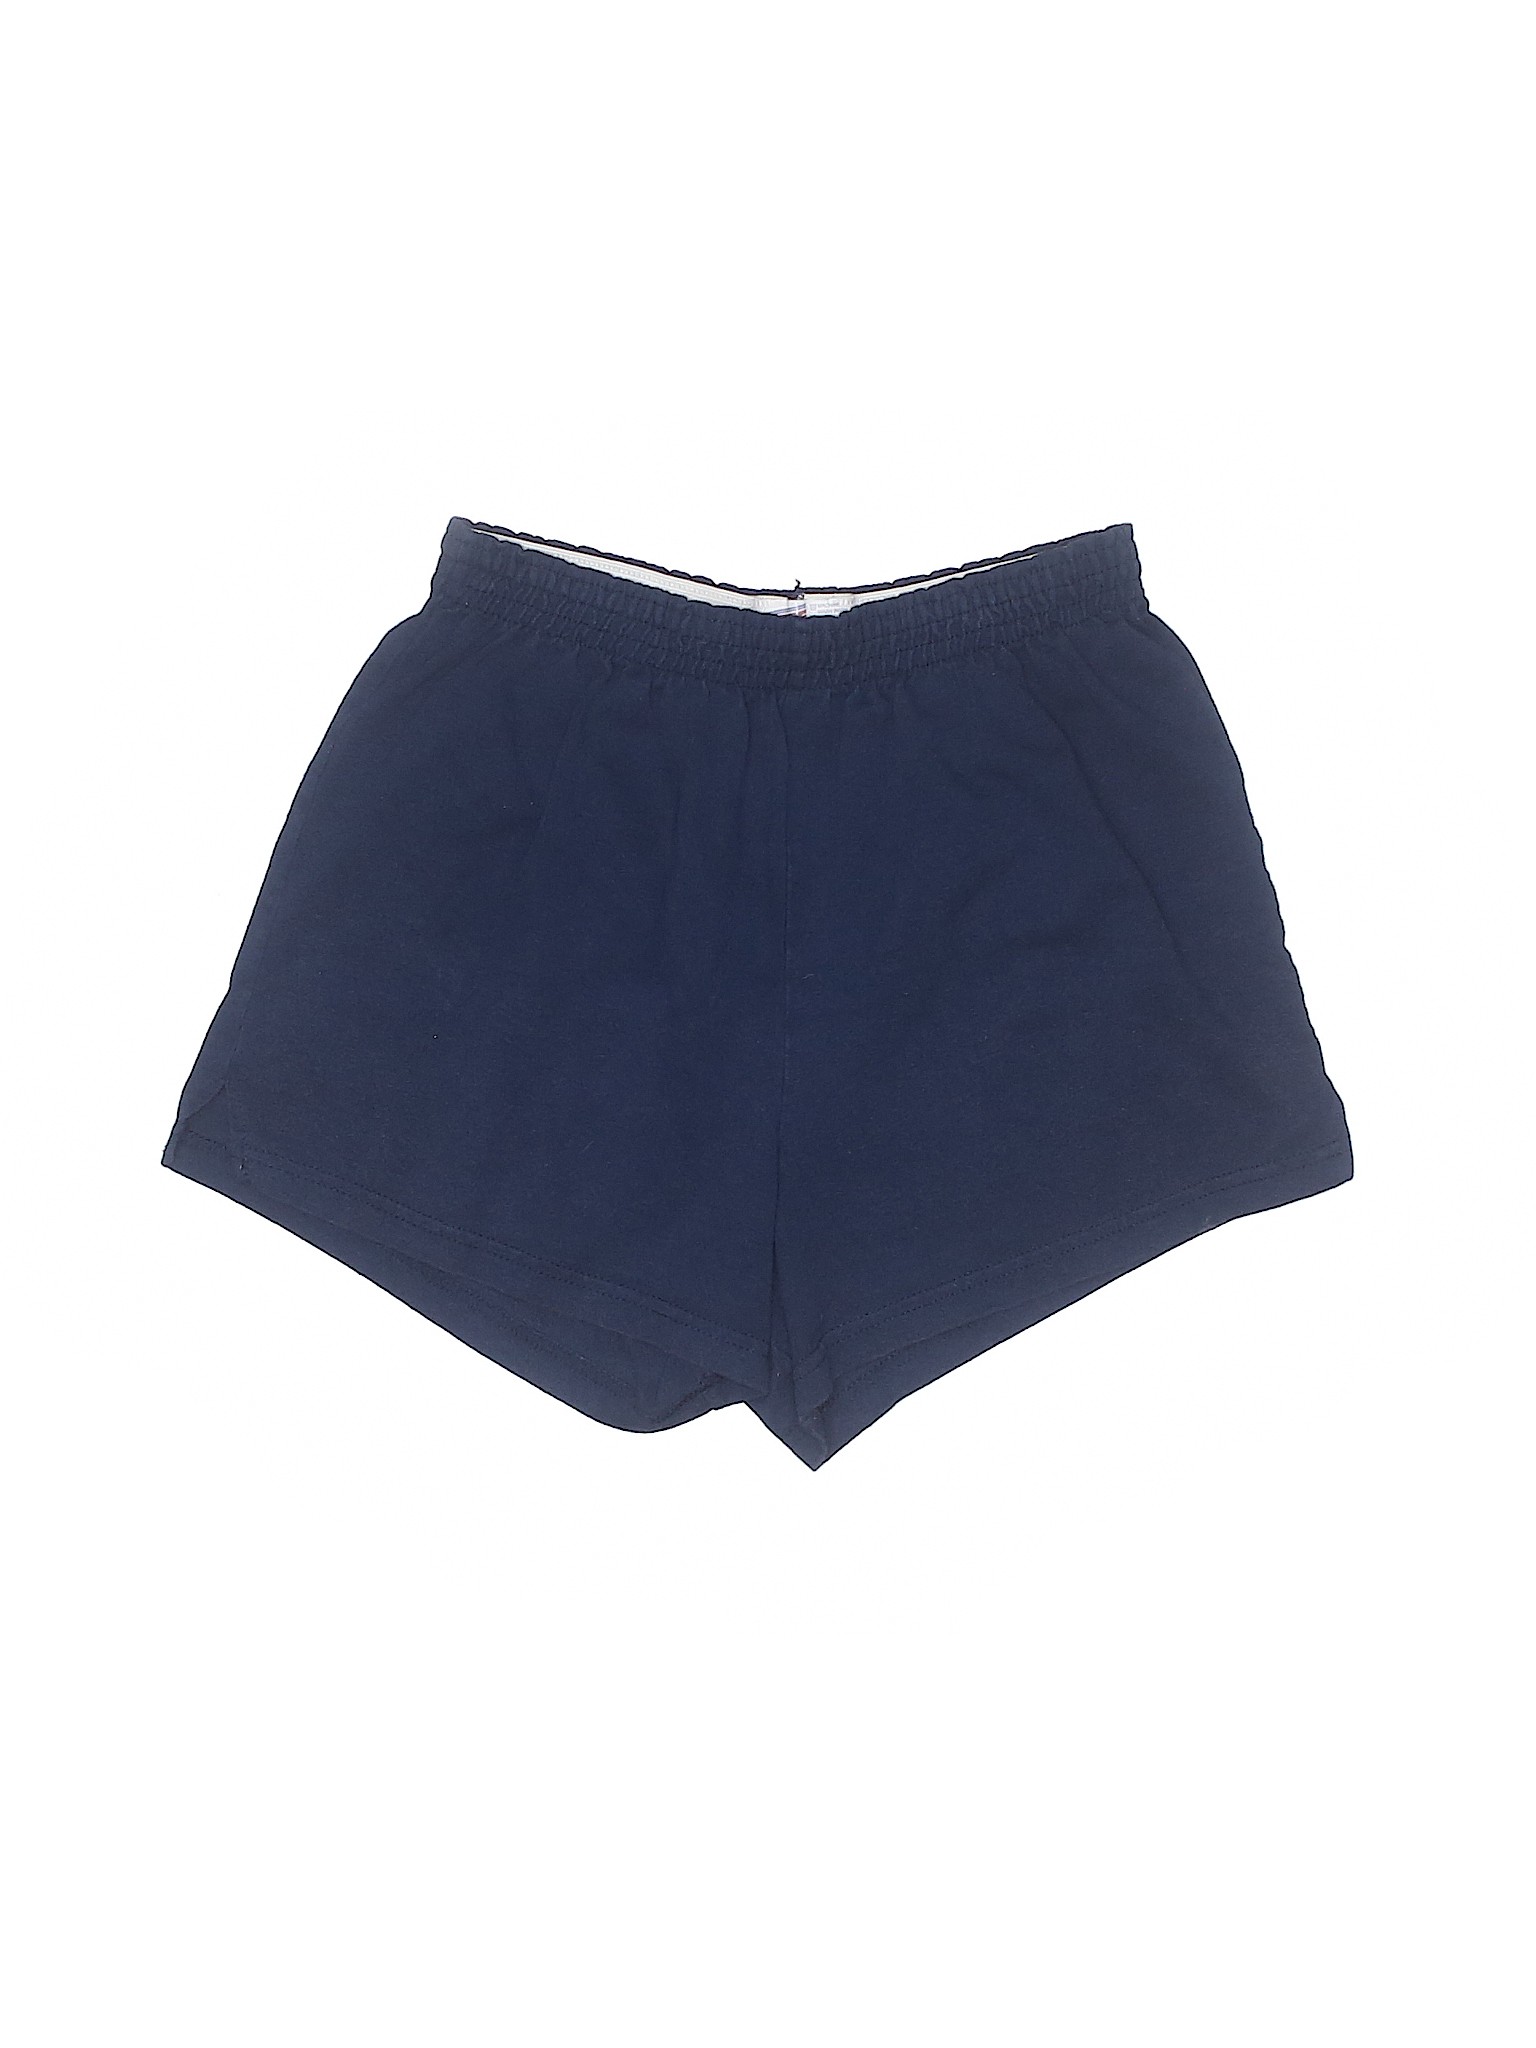 SOFFE Solid Blue Shorts Size M - 77% off | thredUP